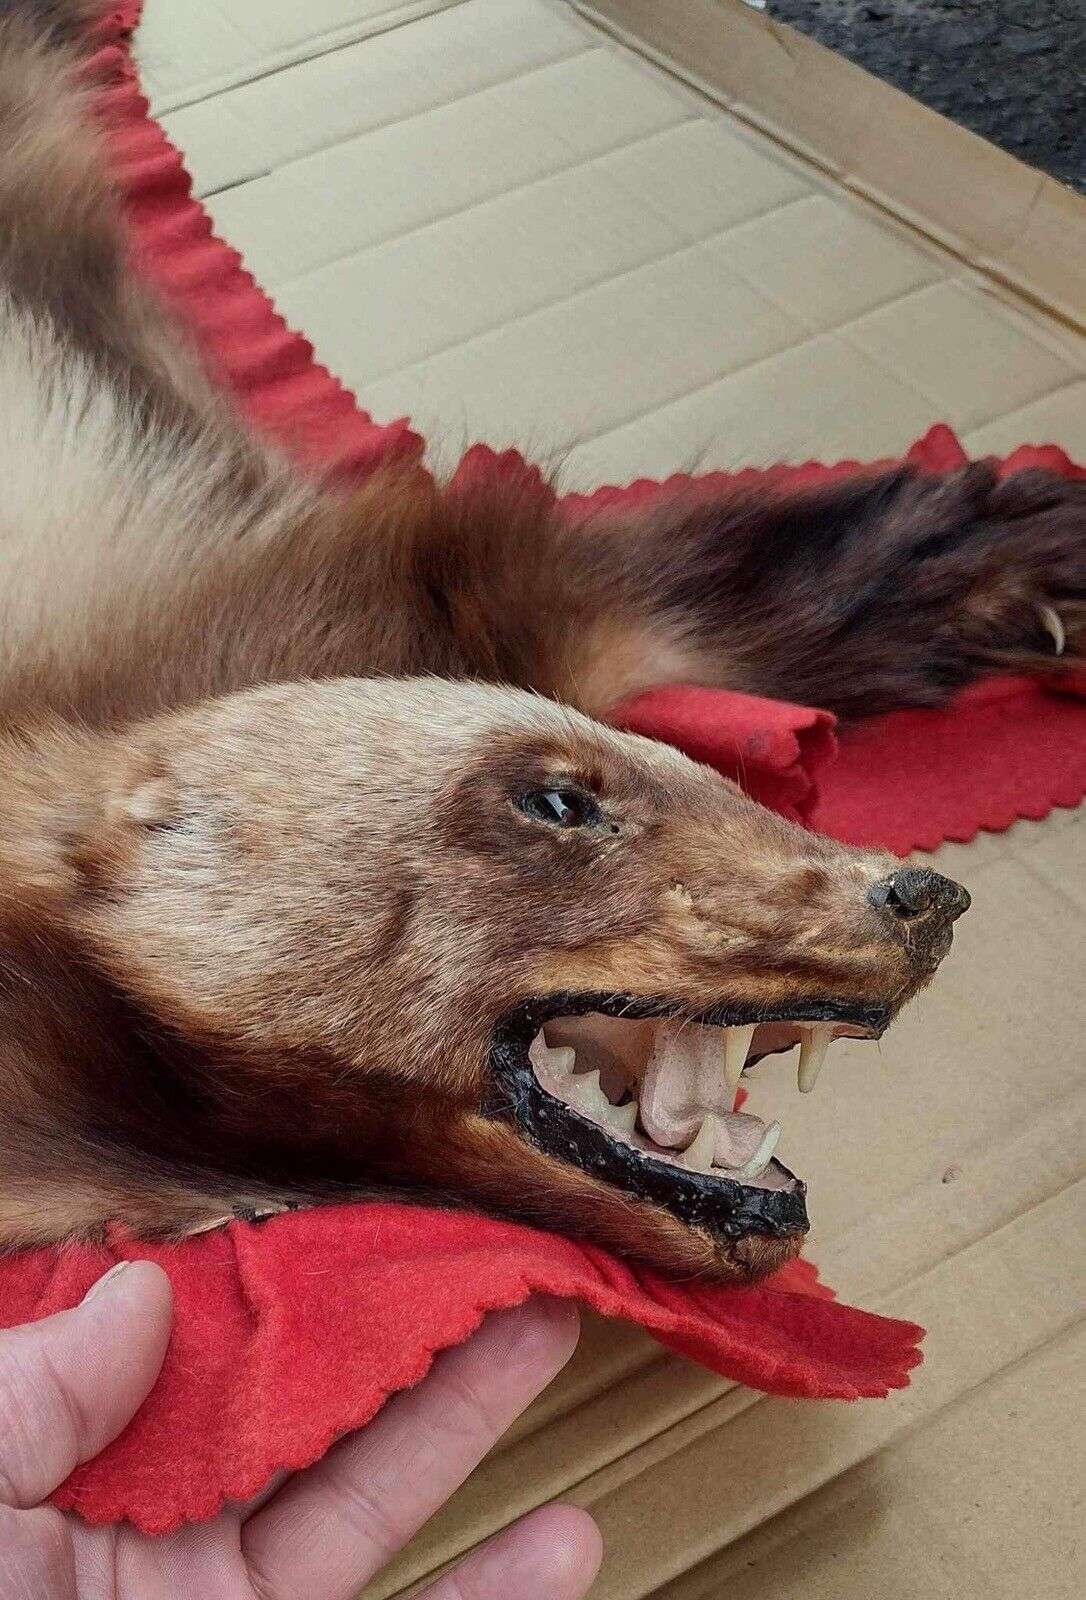 massive Alaskan Wolverine Prime Fur Rug Taxidermy Mount For Sale Oddity